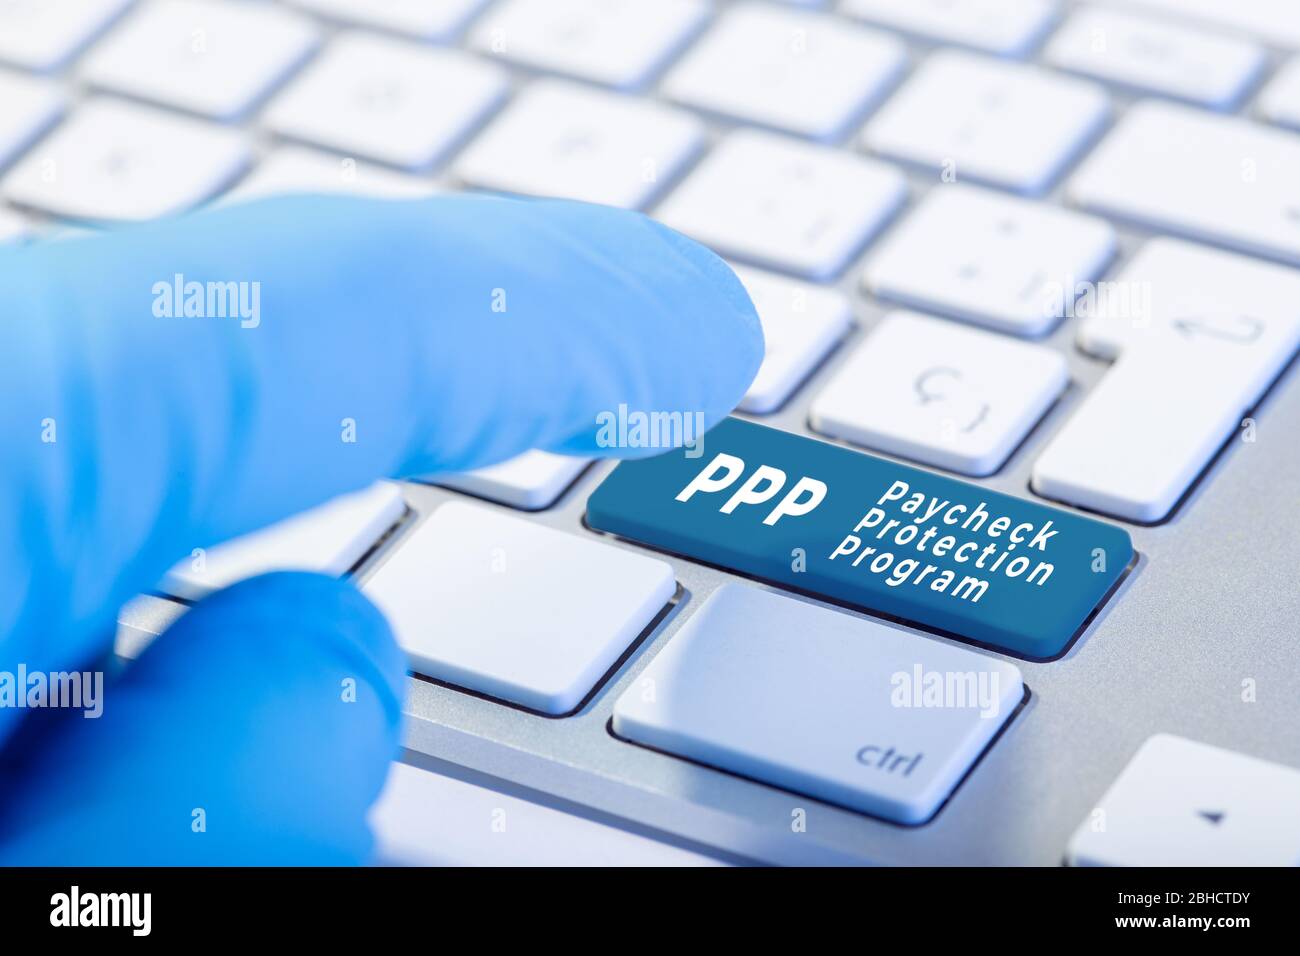 PPP Paycheck Protection Program concept. Inscription on Keyboard Key Stock Photo